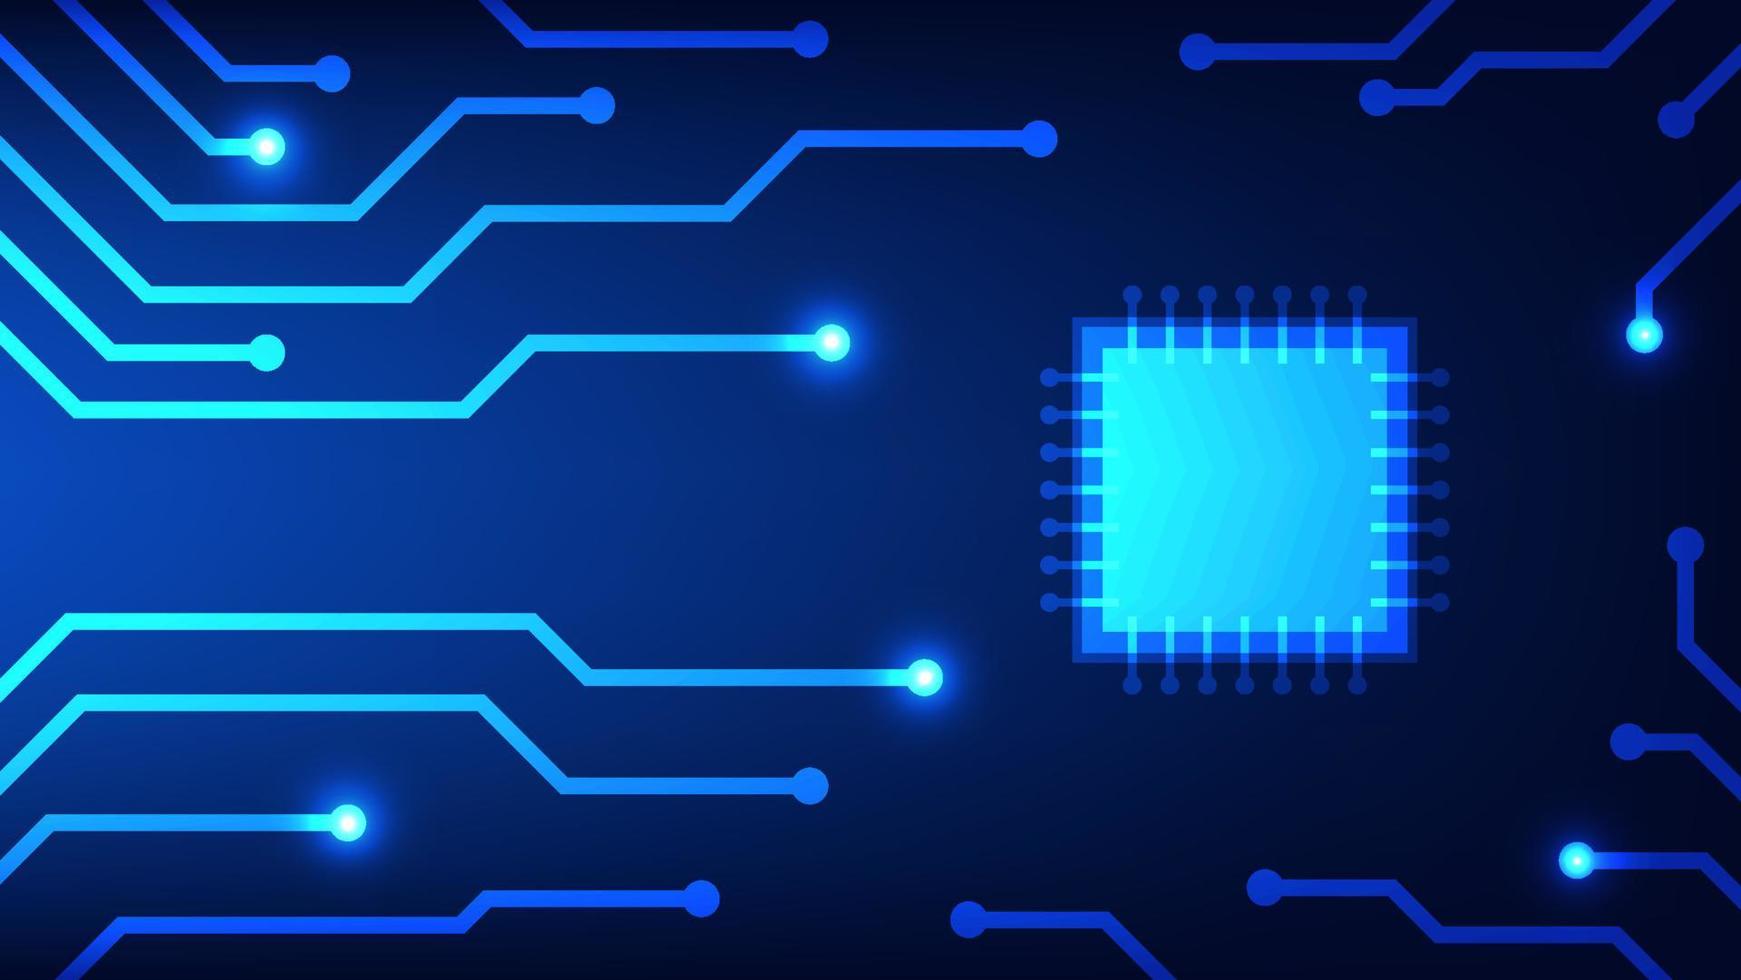 krets styrelse med chip på blå belysning bakgrund. teknologi och Hej tech grafisk design element begrepp vektor